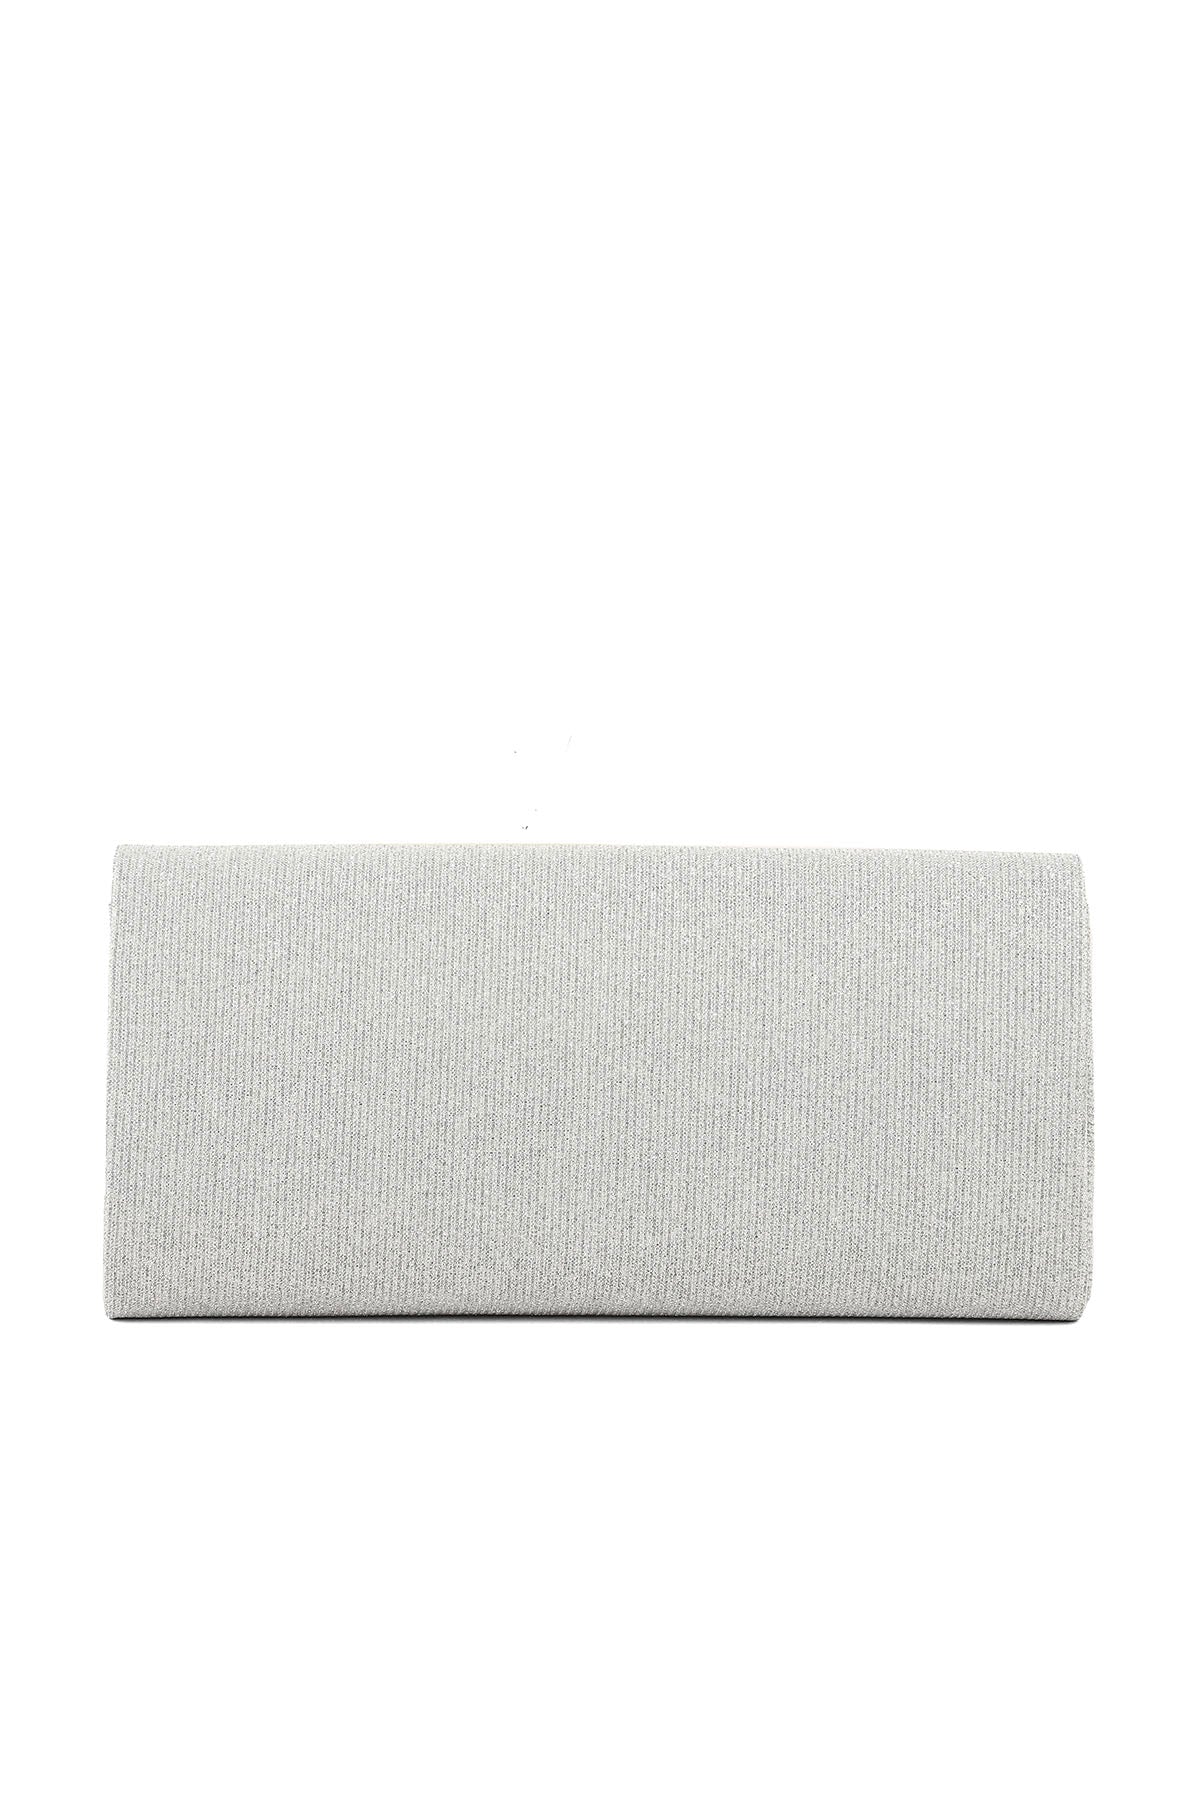 Flap Shoulder Bags B21586-Silver